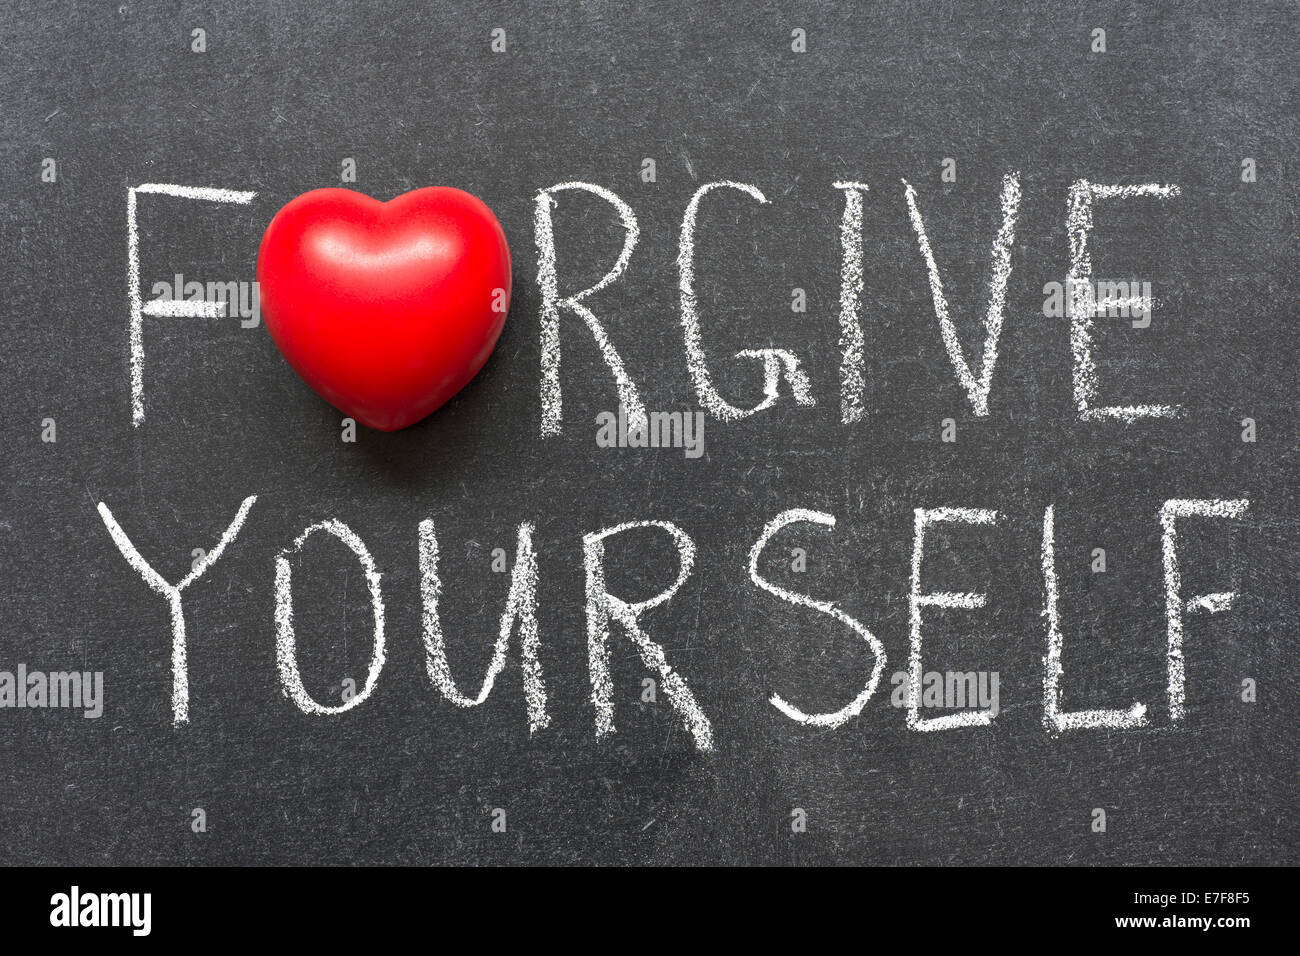 forgive yourself phrase handwritten on school blackboard Stock Photo